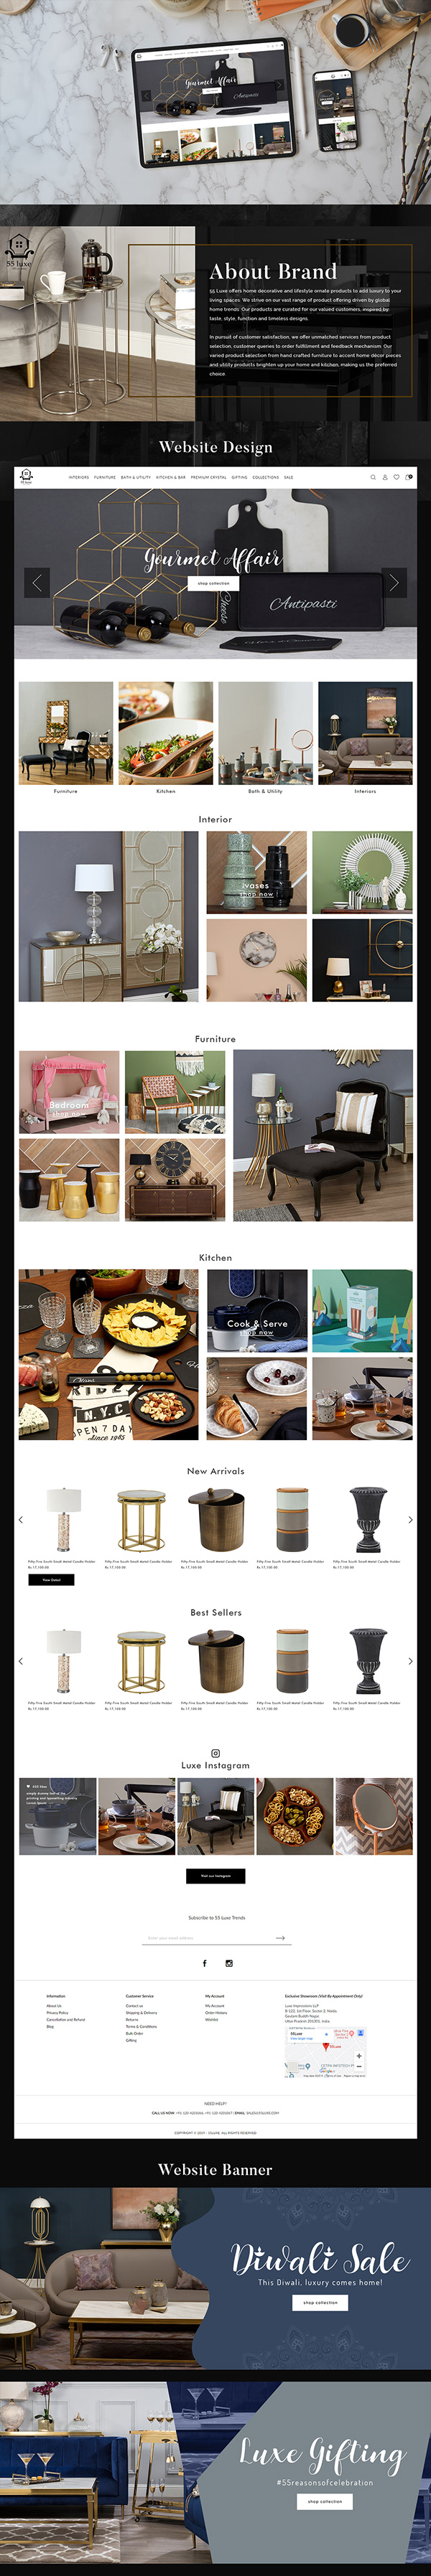 55 Luxe - Home Interior Brand